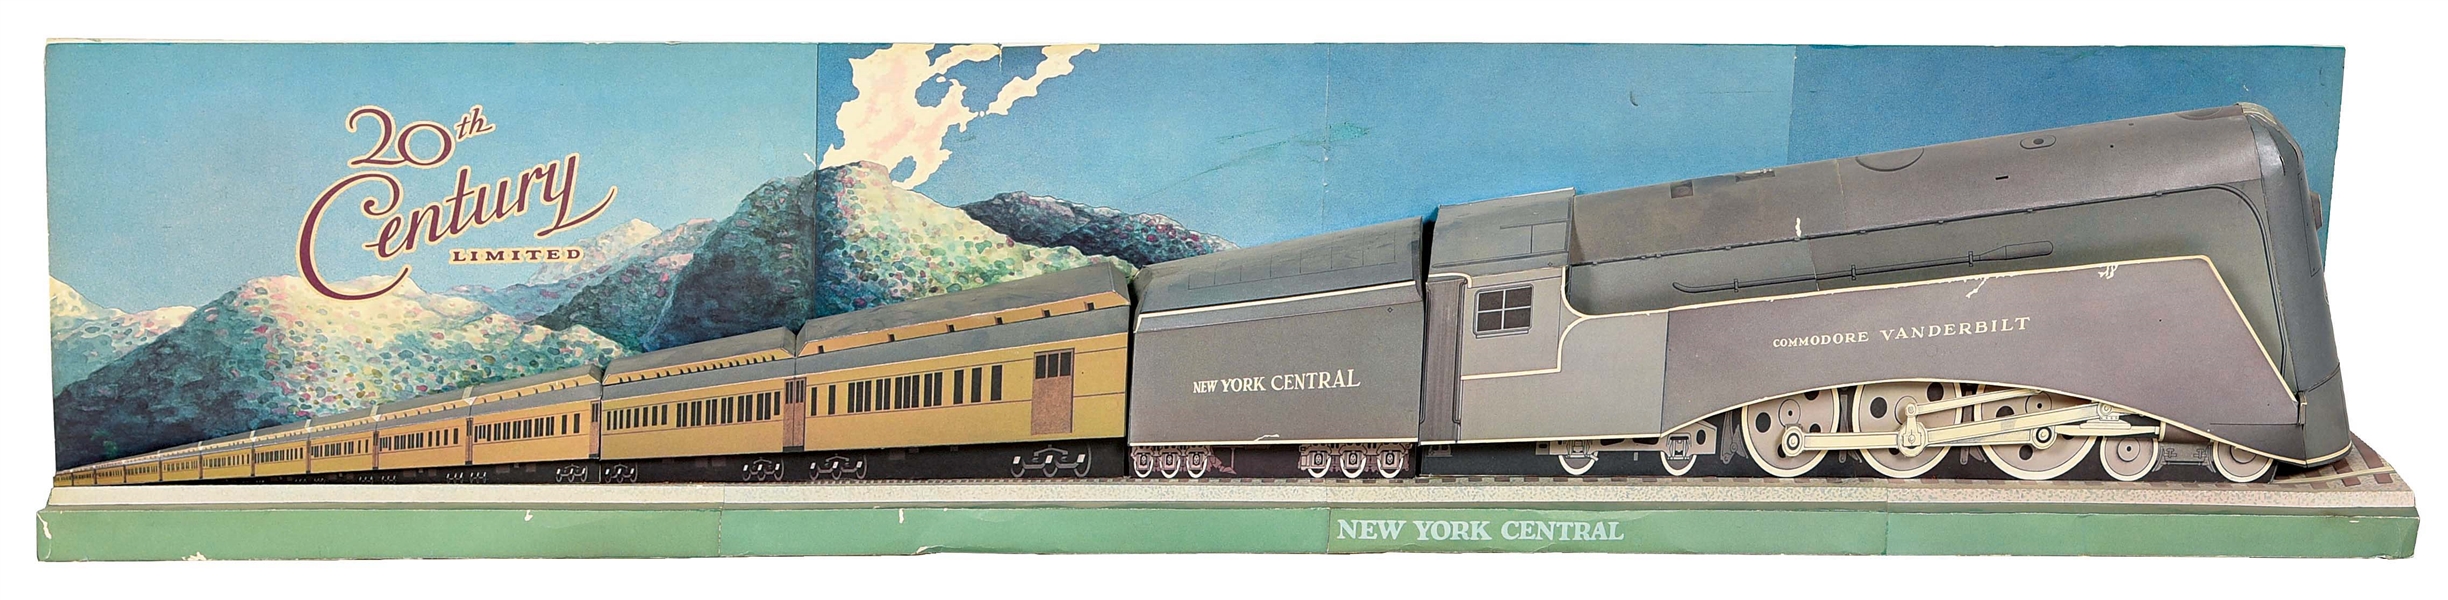 NEW YORK CENTRAL THREE-DIMENSIONAL CARDBOARD ADVERTISING FOR 20TH CENTURY LTD.